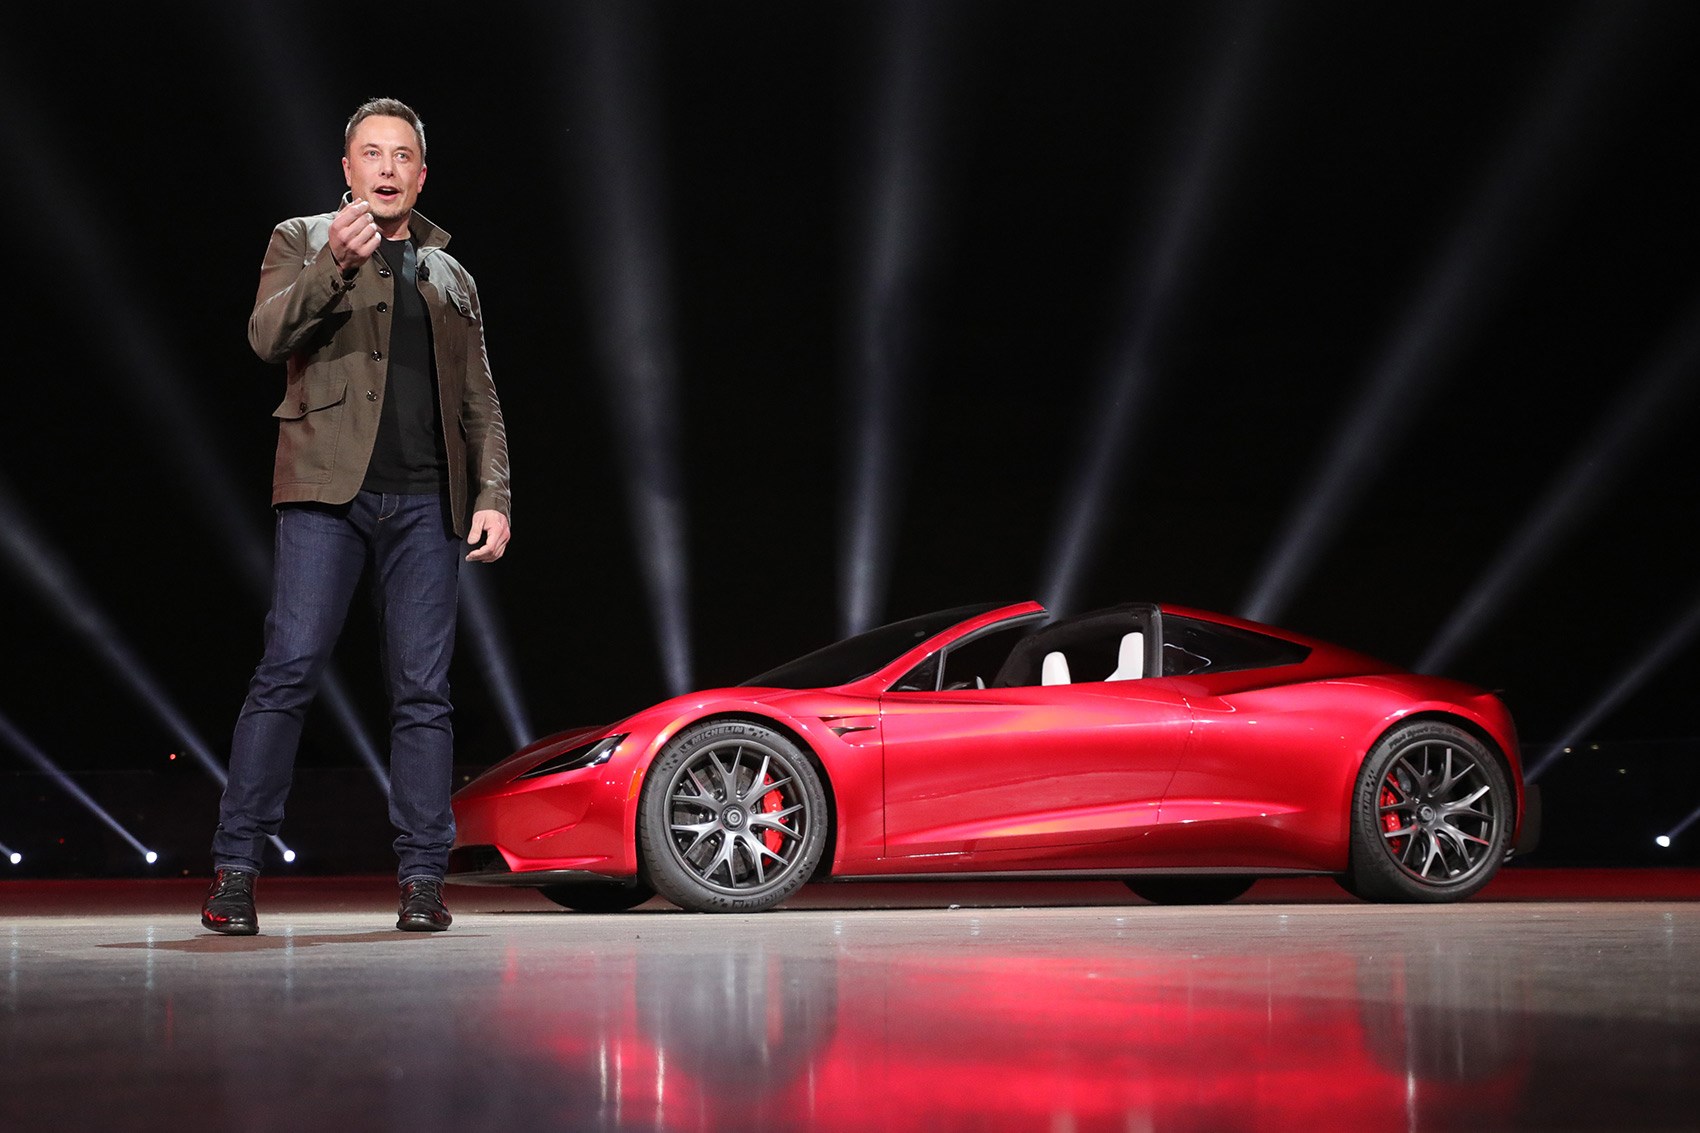 Tesla Roadster running four years late, 'due 2024' – Elon Musk